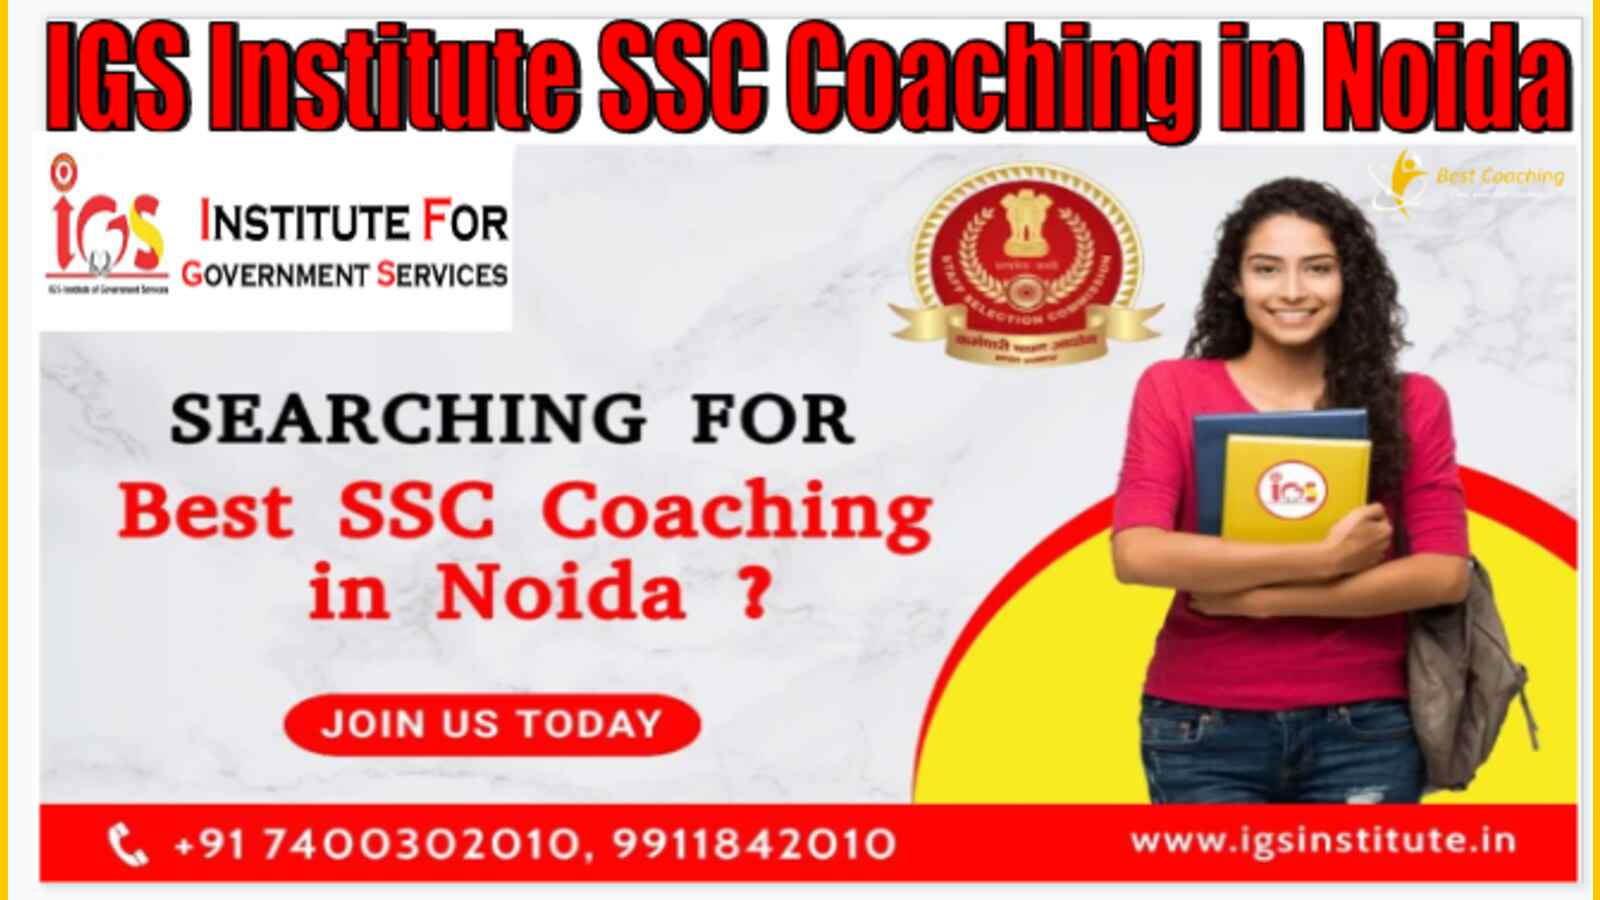 IGS Institute SSC Coaching in Noida